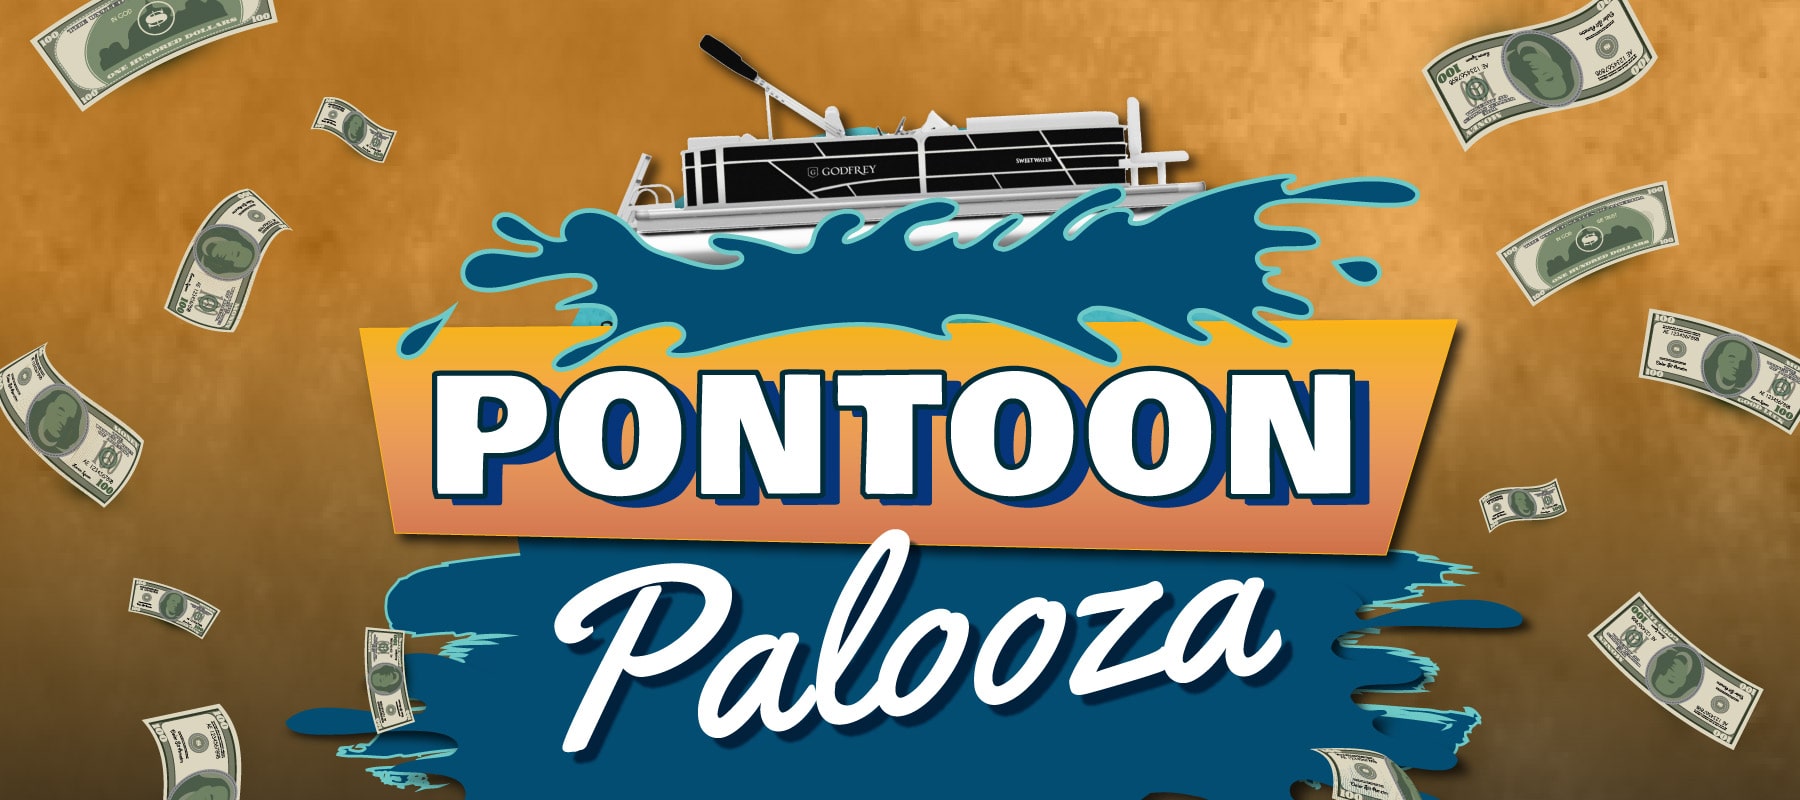 pontoon palooza promotion at point place casino